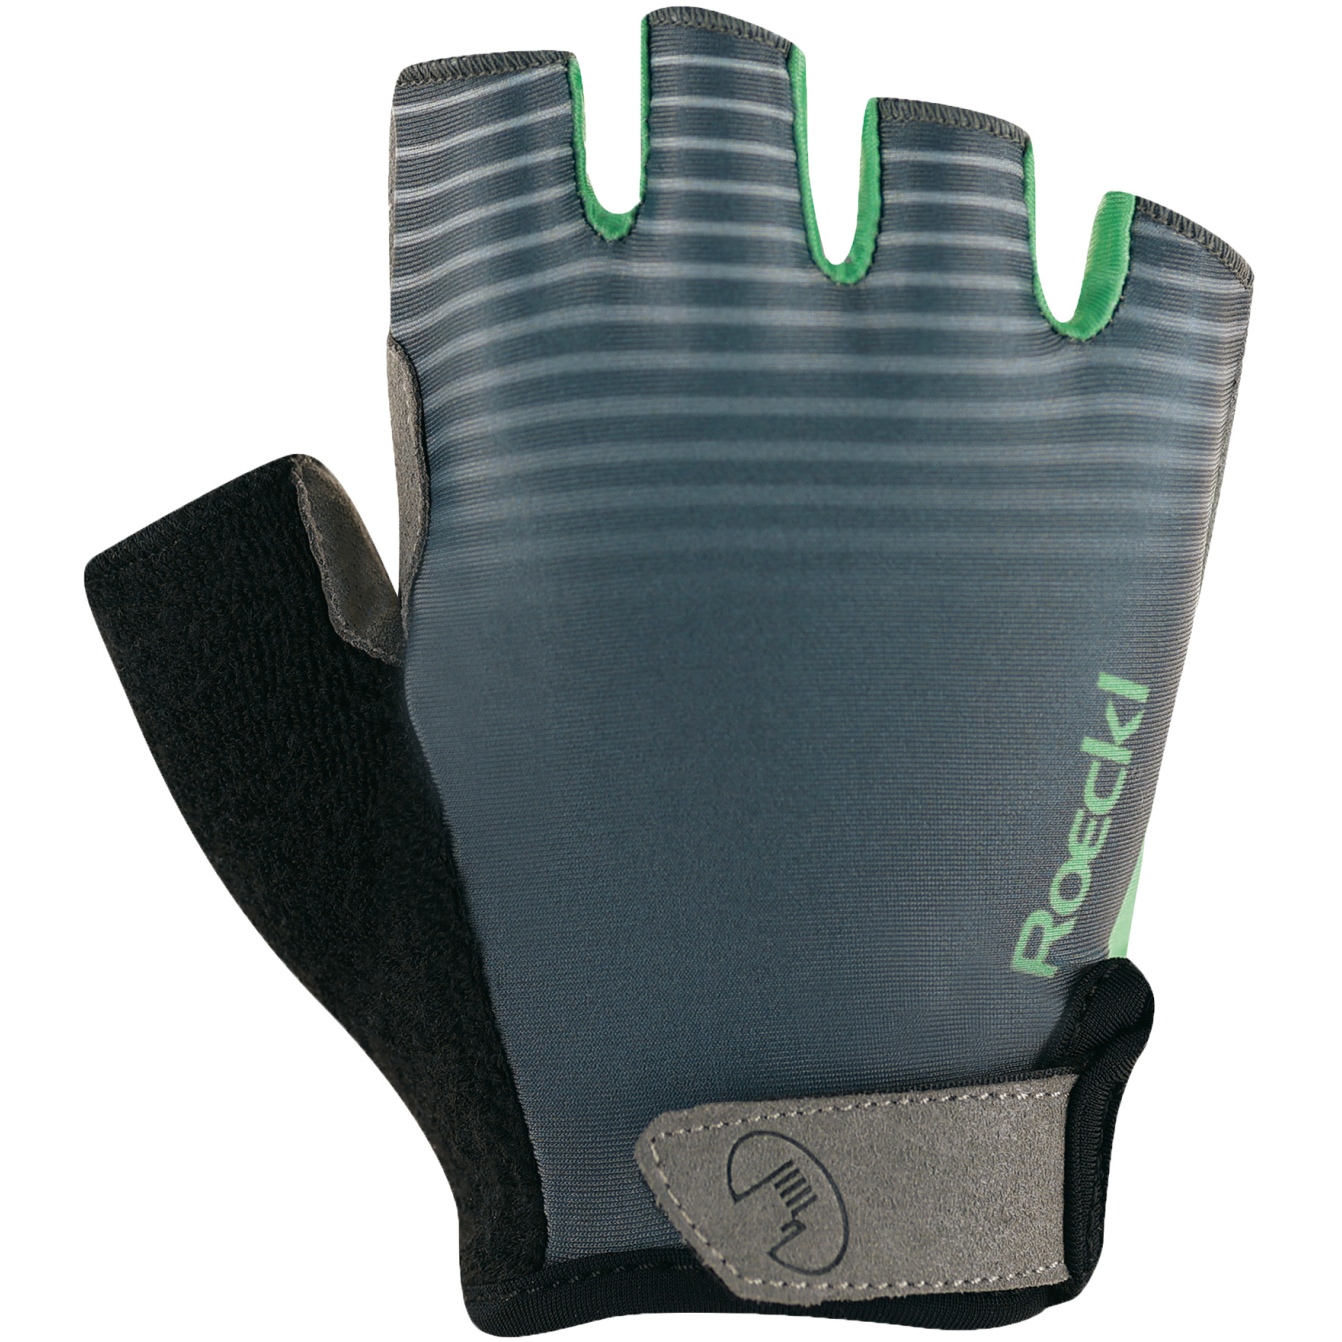 Picture of Roeckl Sports Bernex Cycling Gloves - castlerock/aqua green 8712